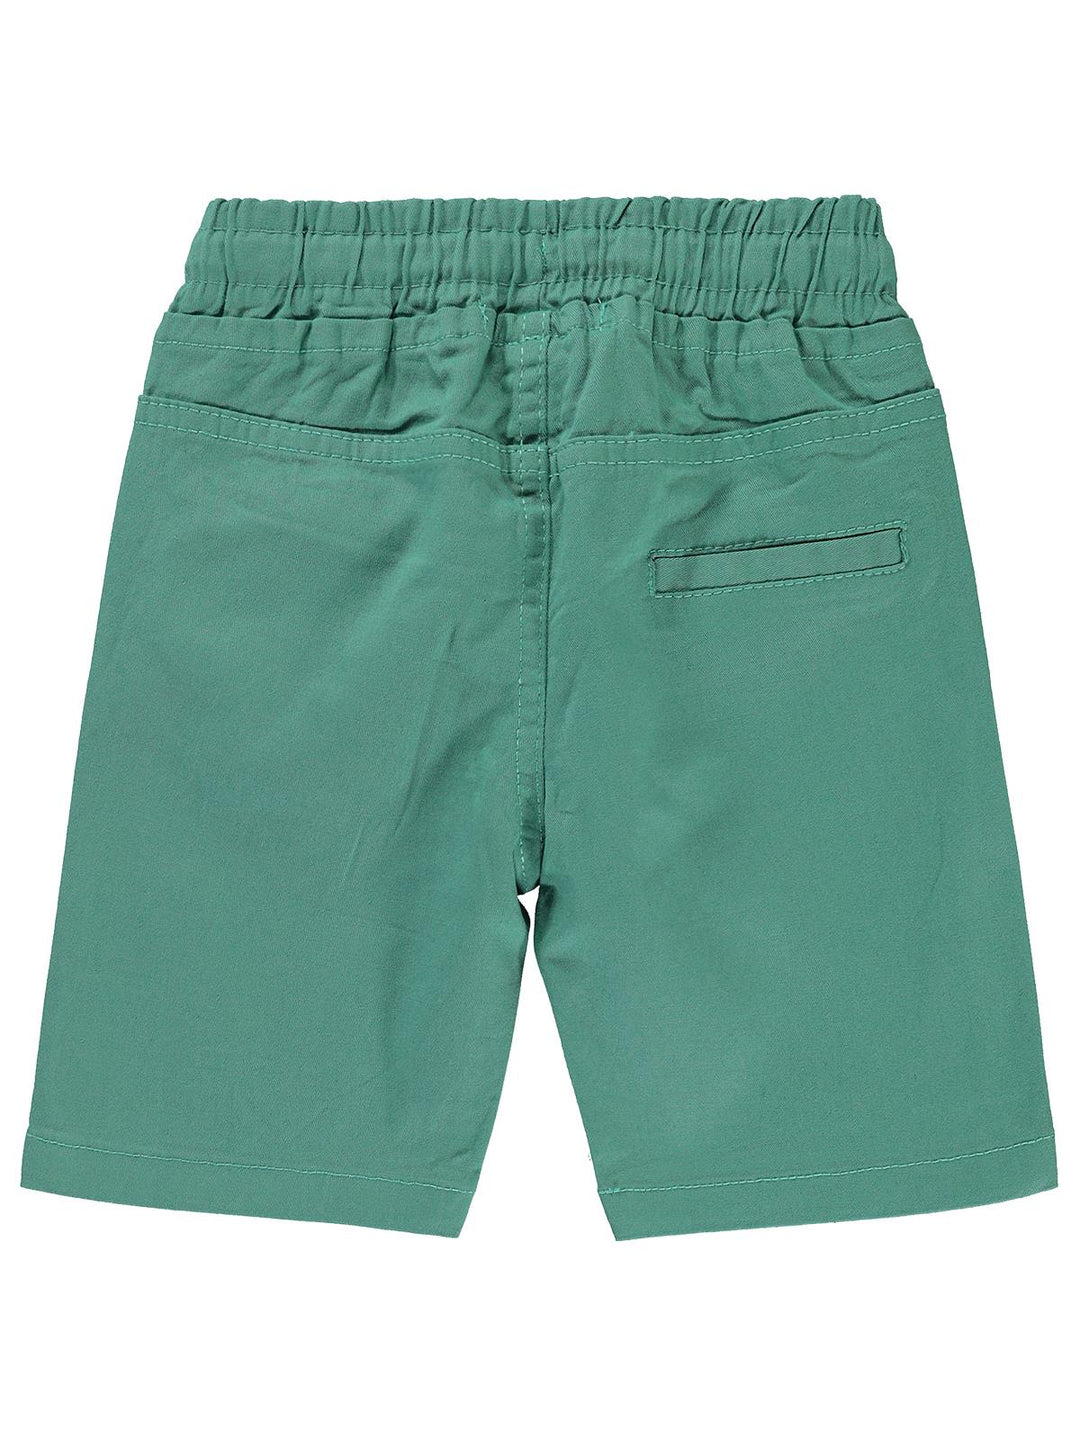 Civil Boys Cotton Long Shorts #2204-3 (S-22)